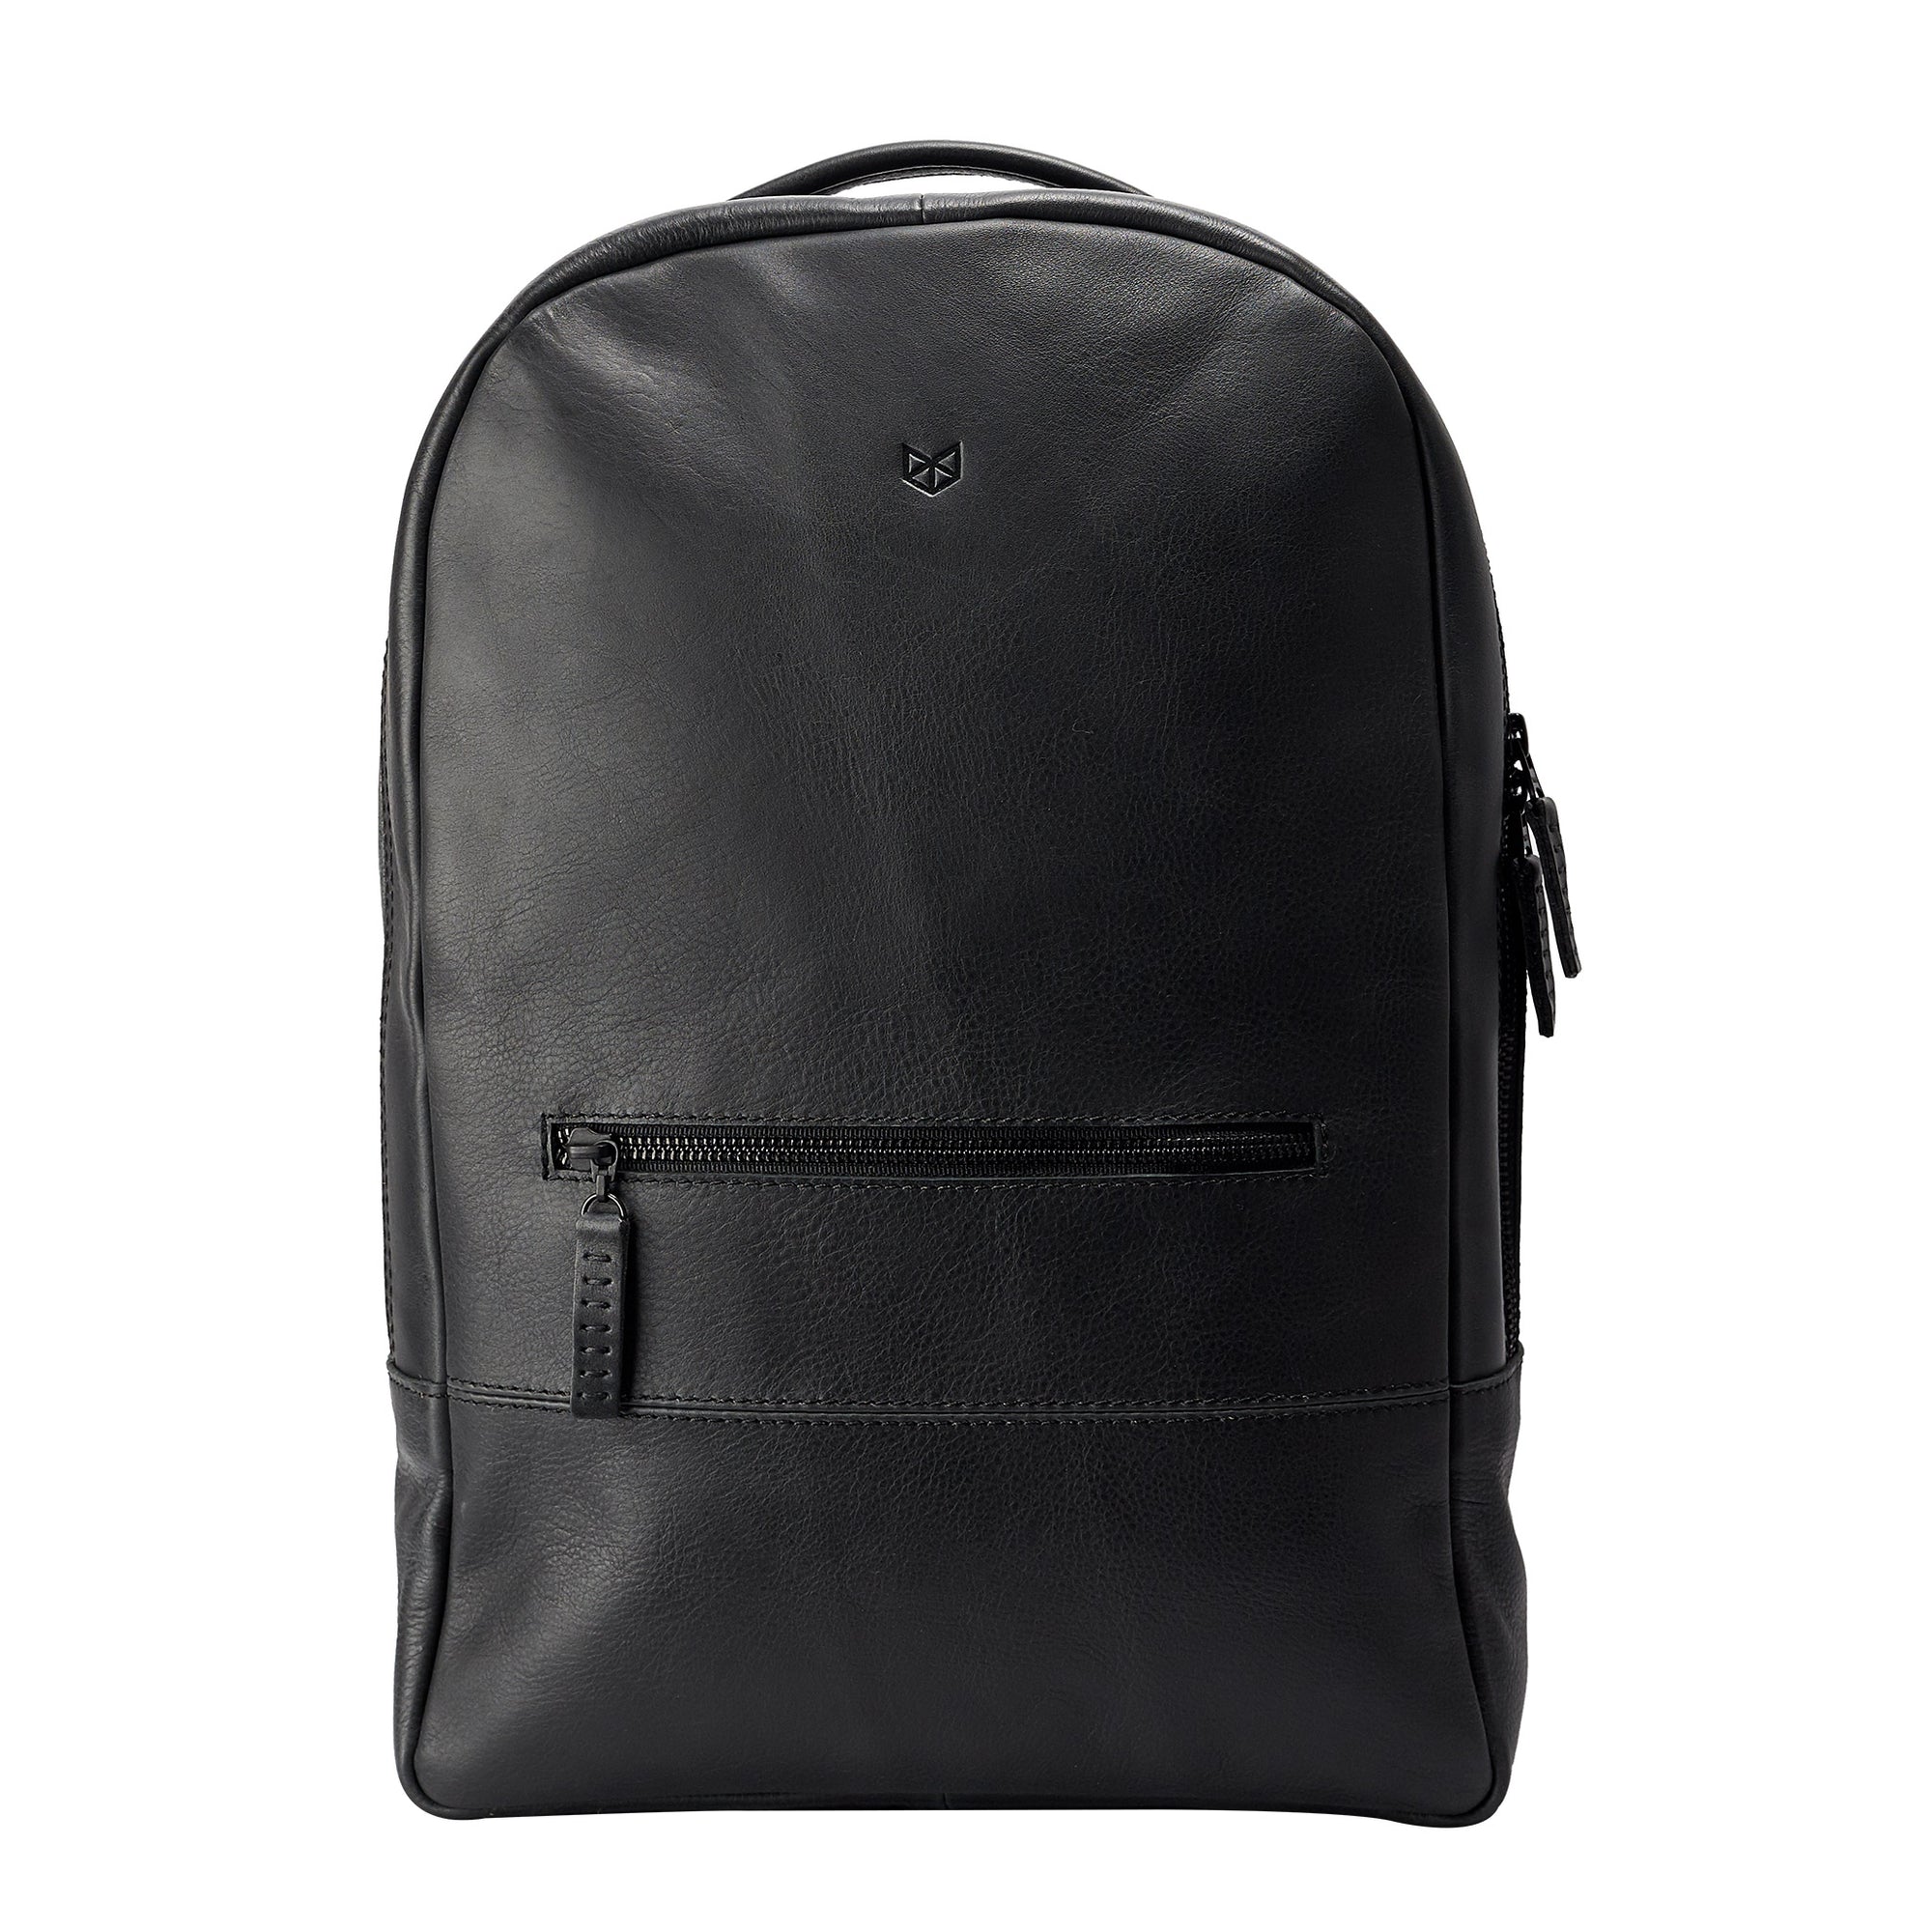 Black. Bisonte Backpack Rucksack by Capra Leather